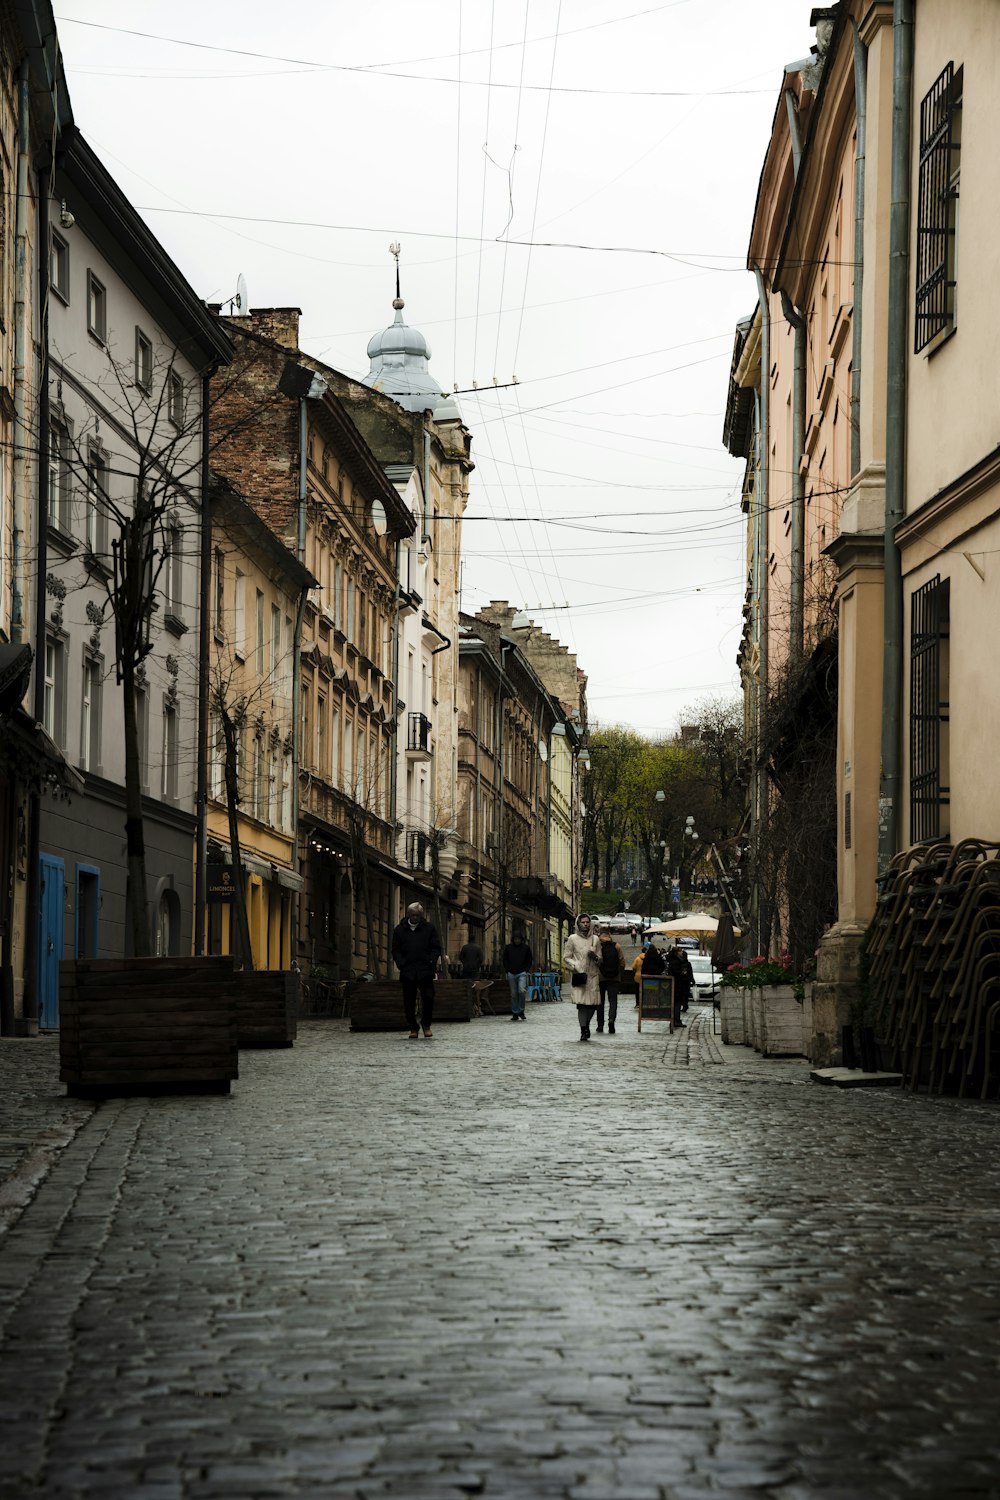 a cobblestone street with people walking on it